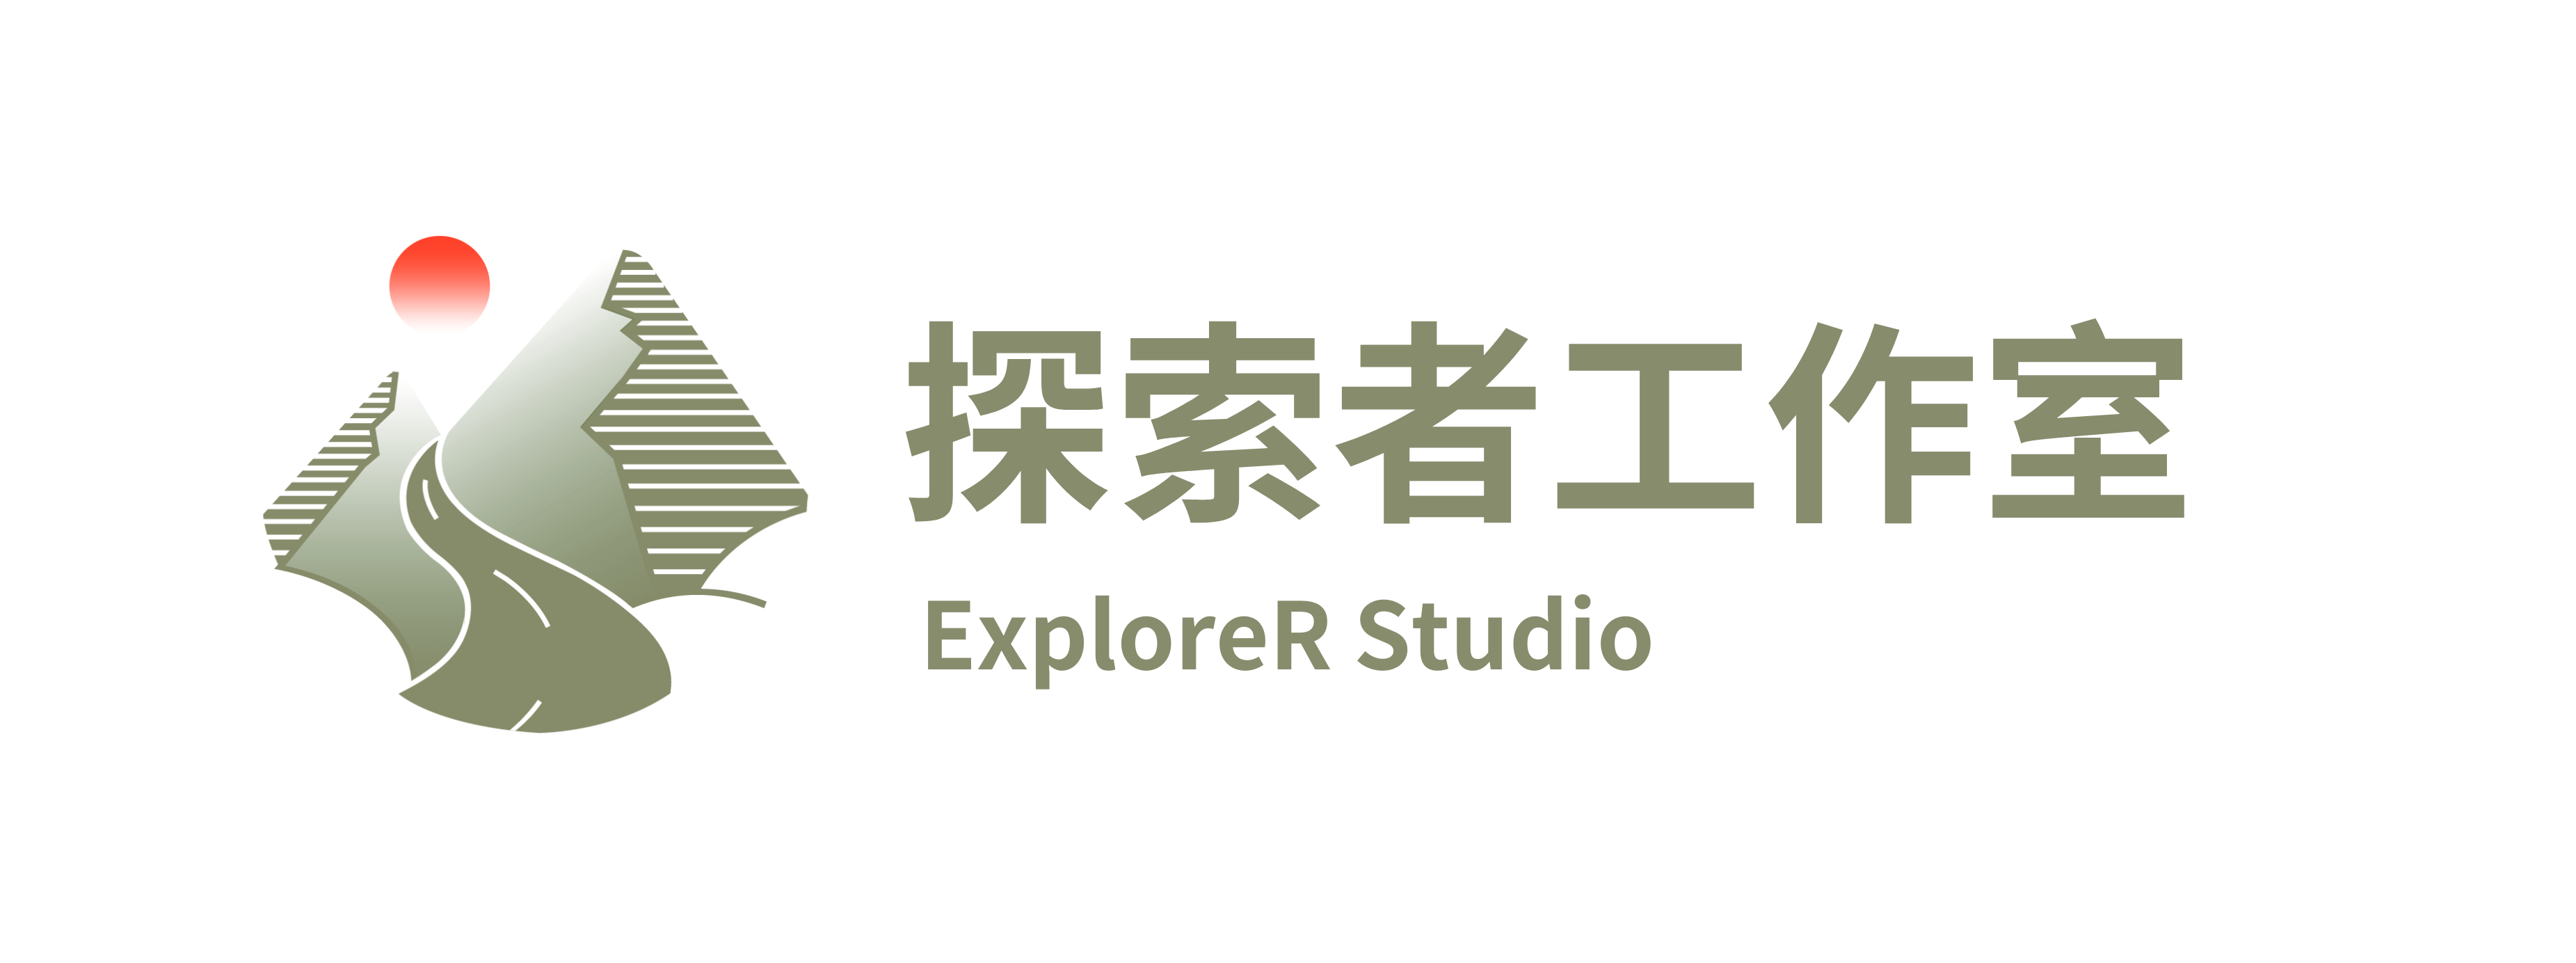 探索者工作室ExploreR Studio